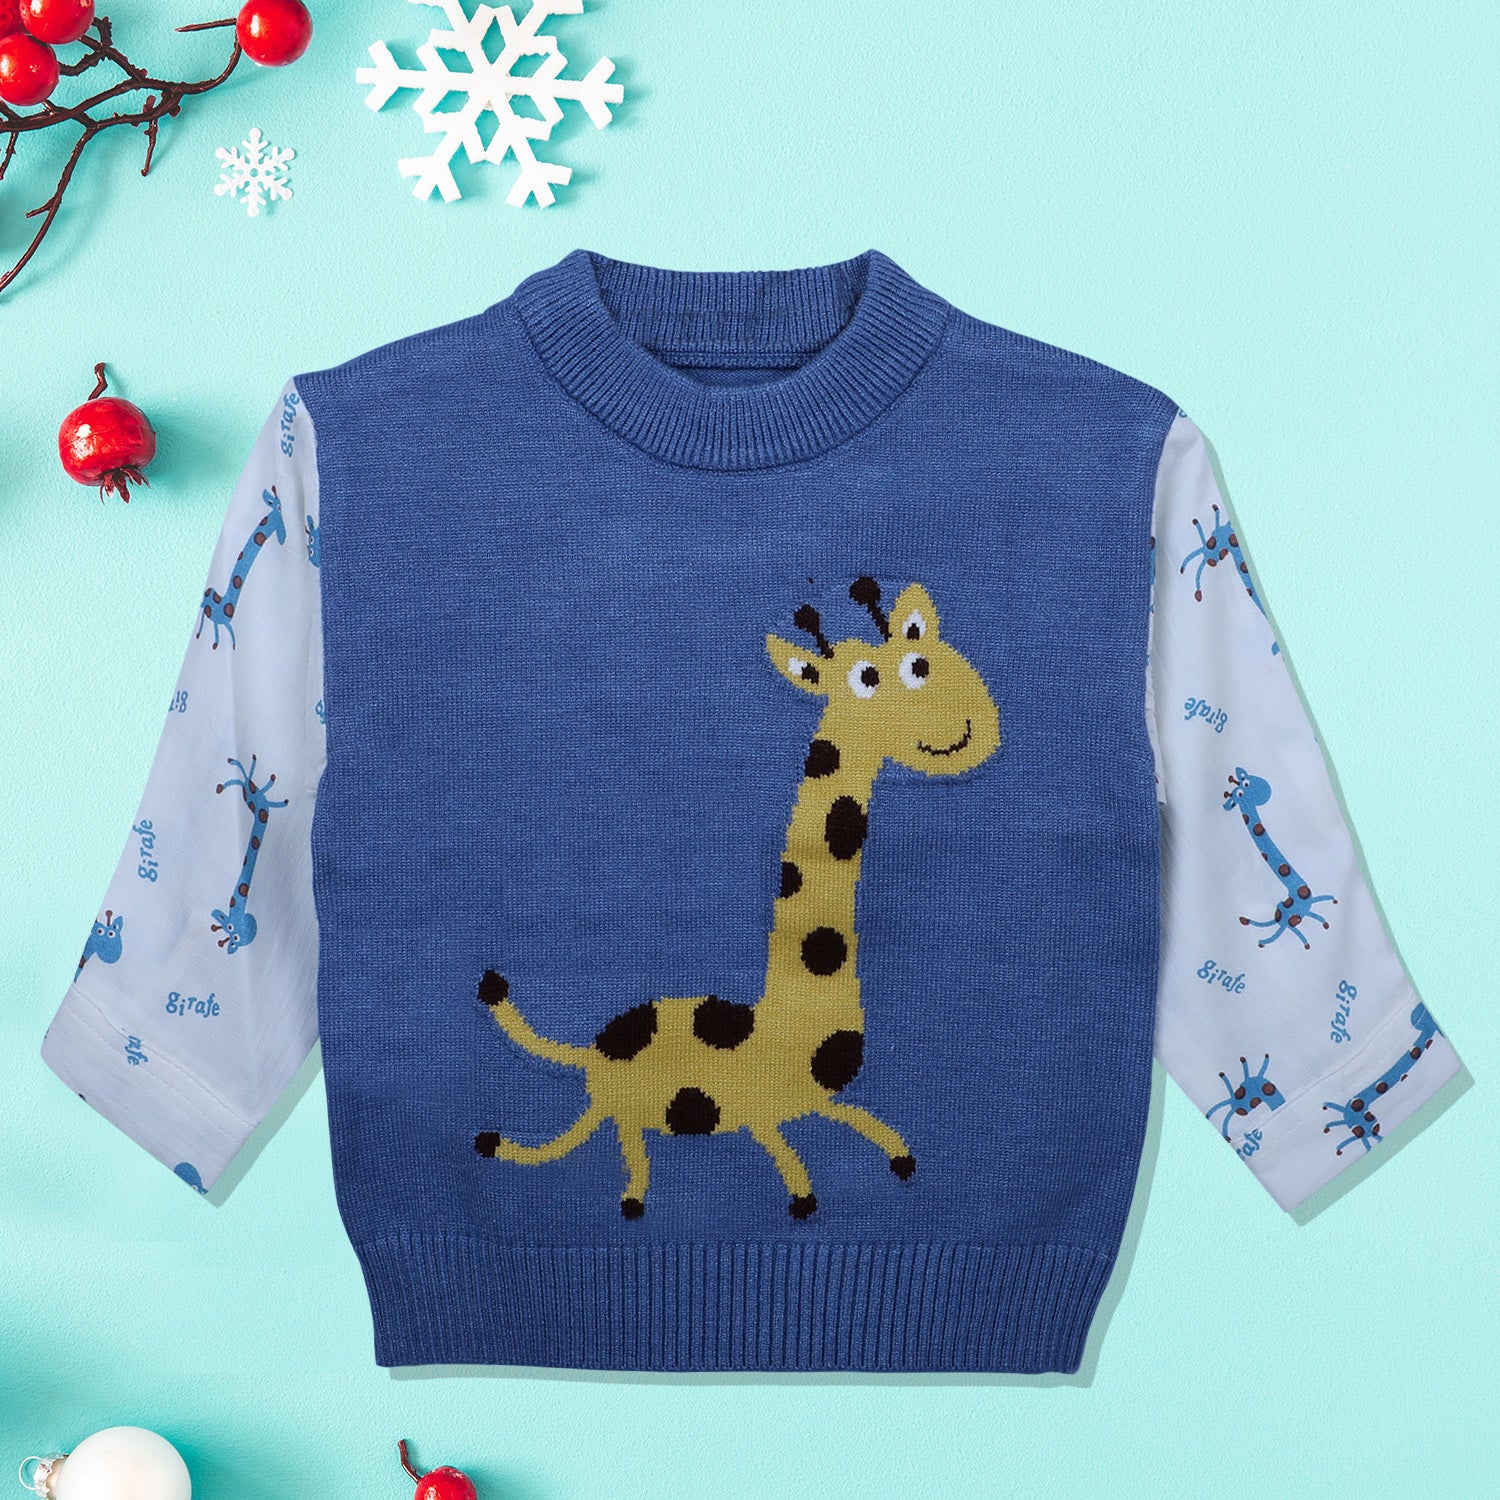 Cute Giraffe Premium Full Sleeves Knitted Sweater - Blue And White - Baby Moo